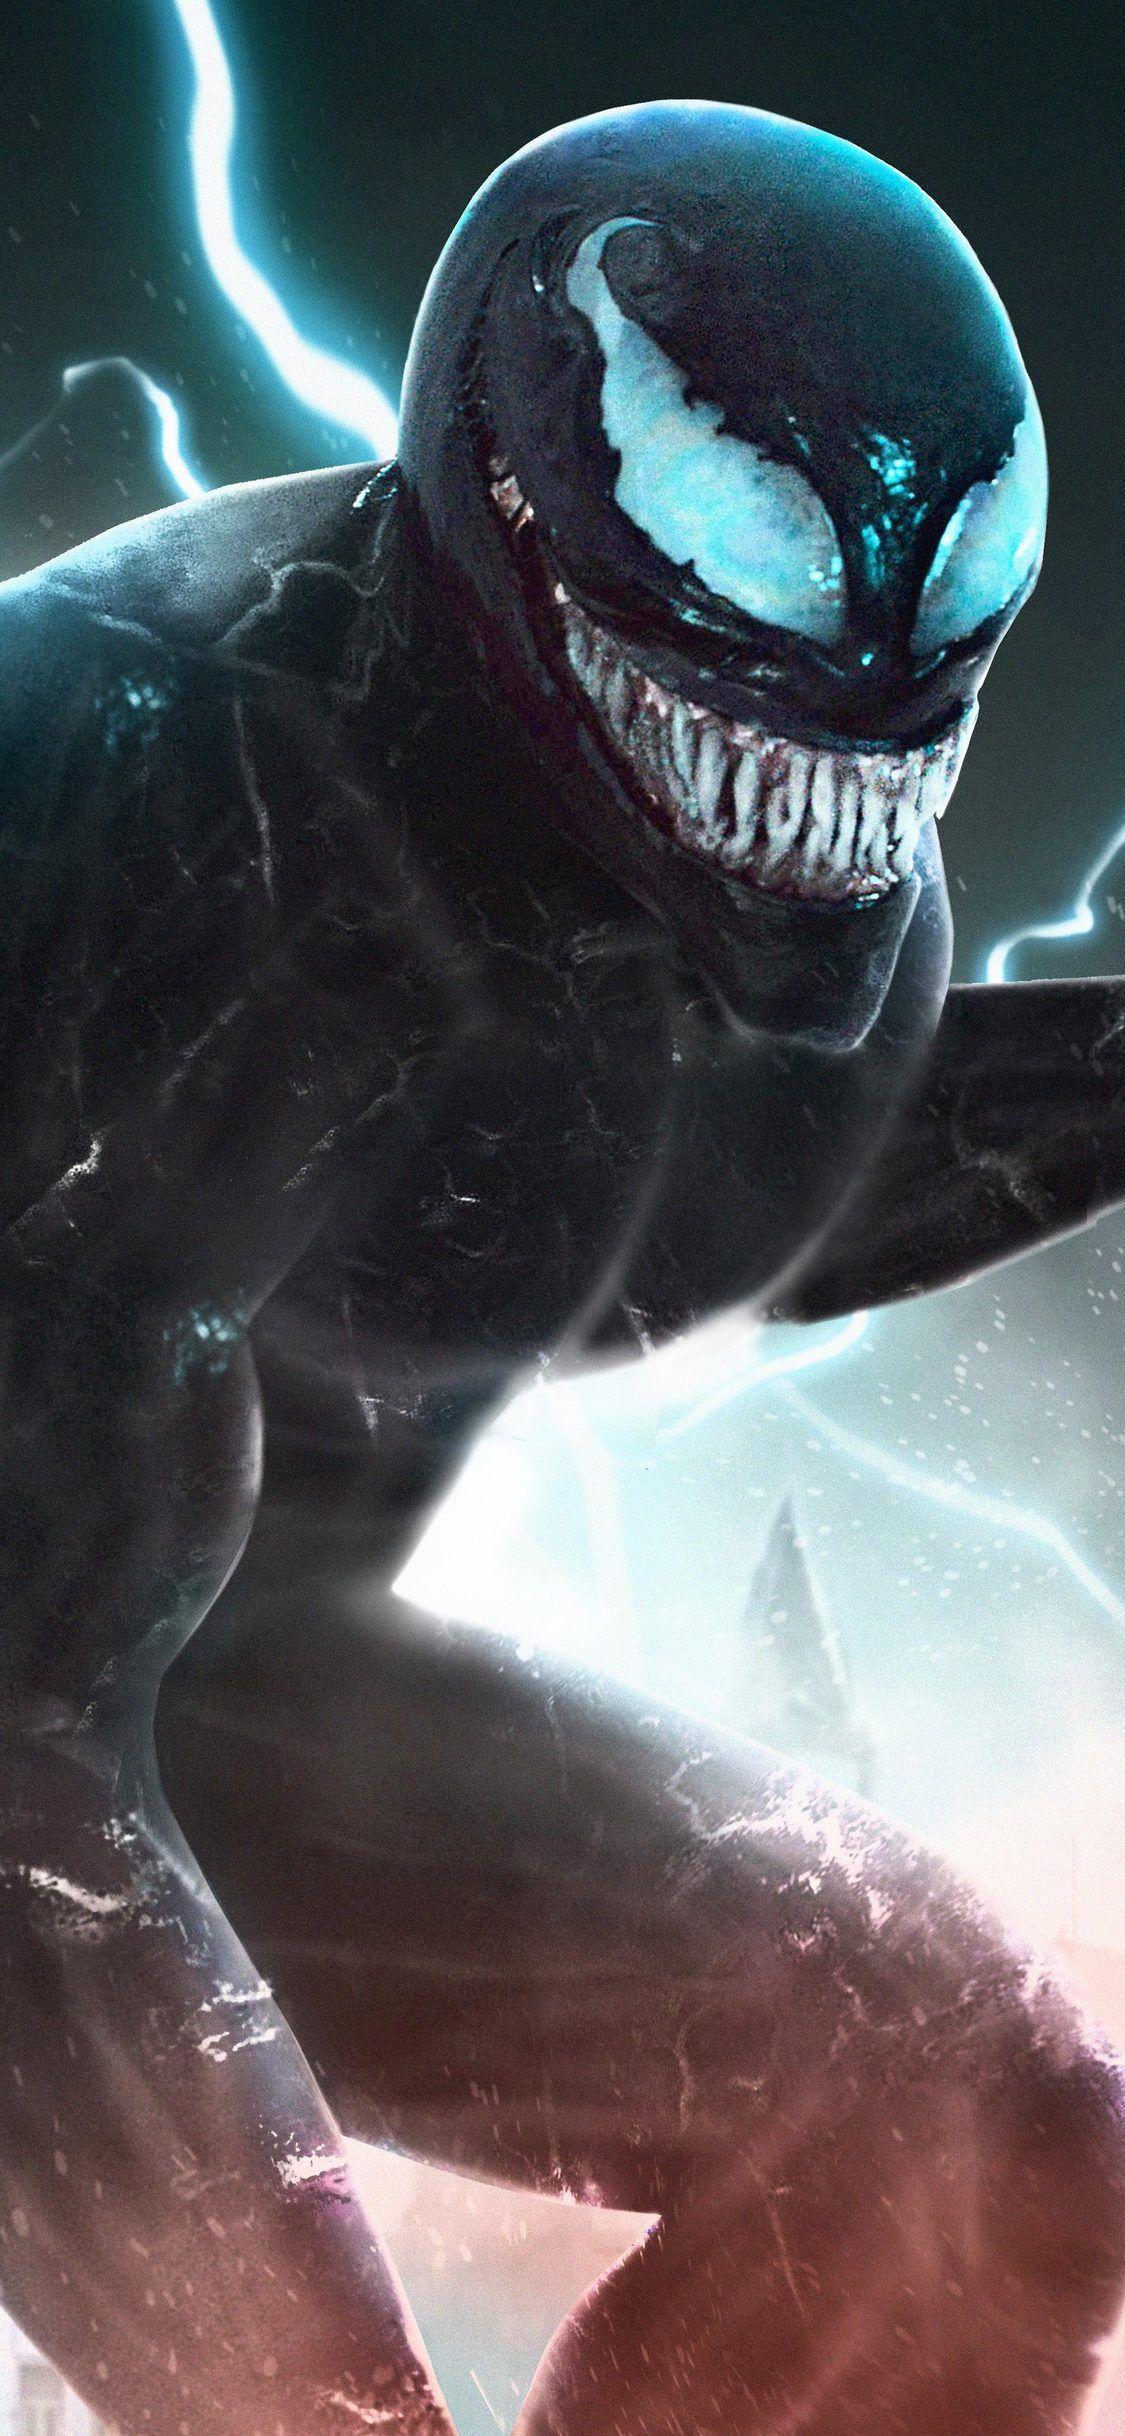 Venom Movie Artwork iPhone X. Venom movie, Marvel venom